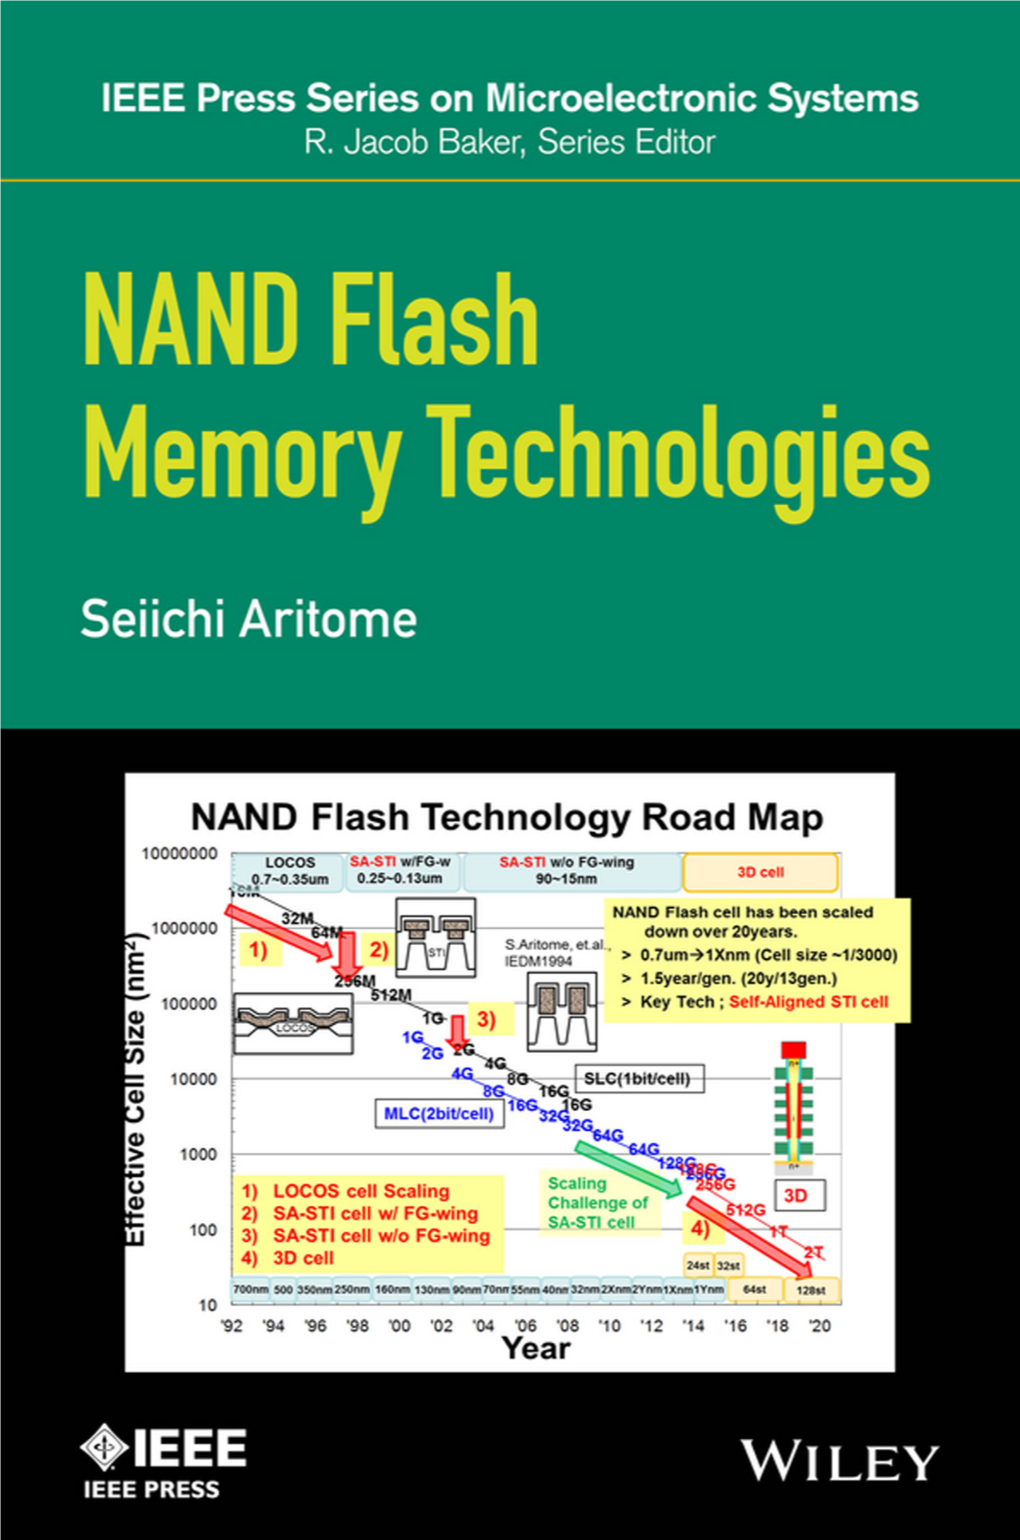 NAND FLASH MEMORY TECHNOLOGIES IEEE Press 445 Hoes Lane Piscataway, NJ 08854